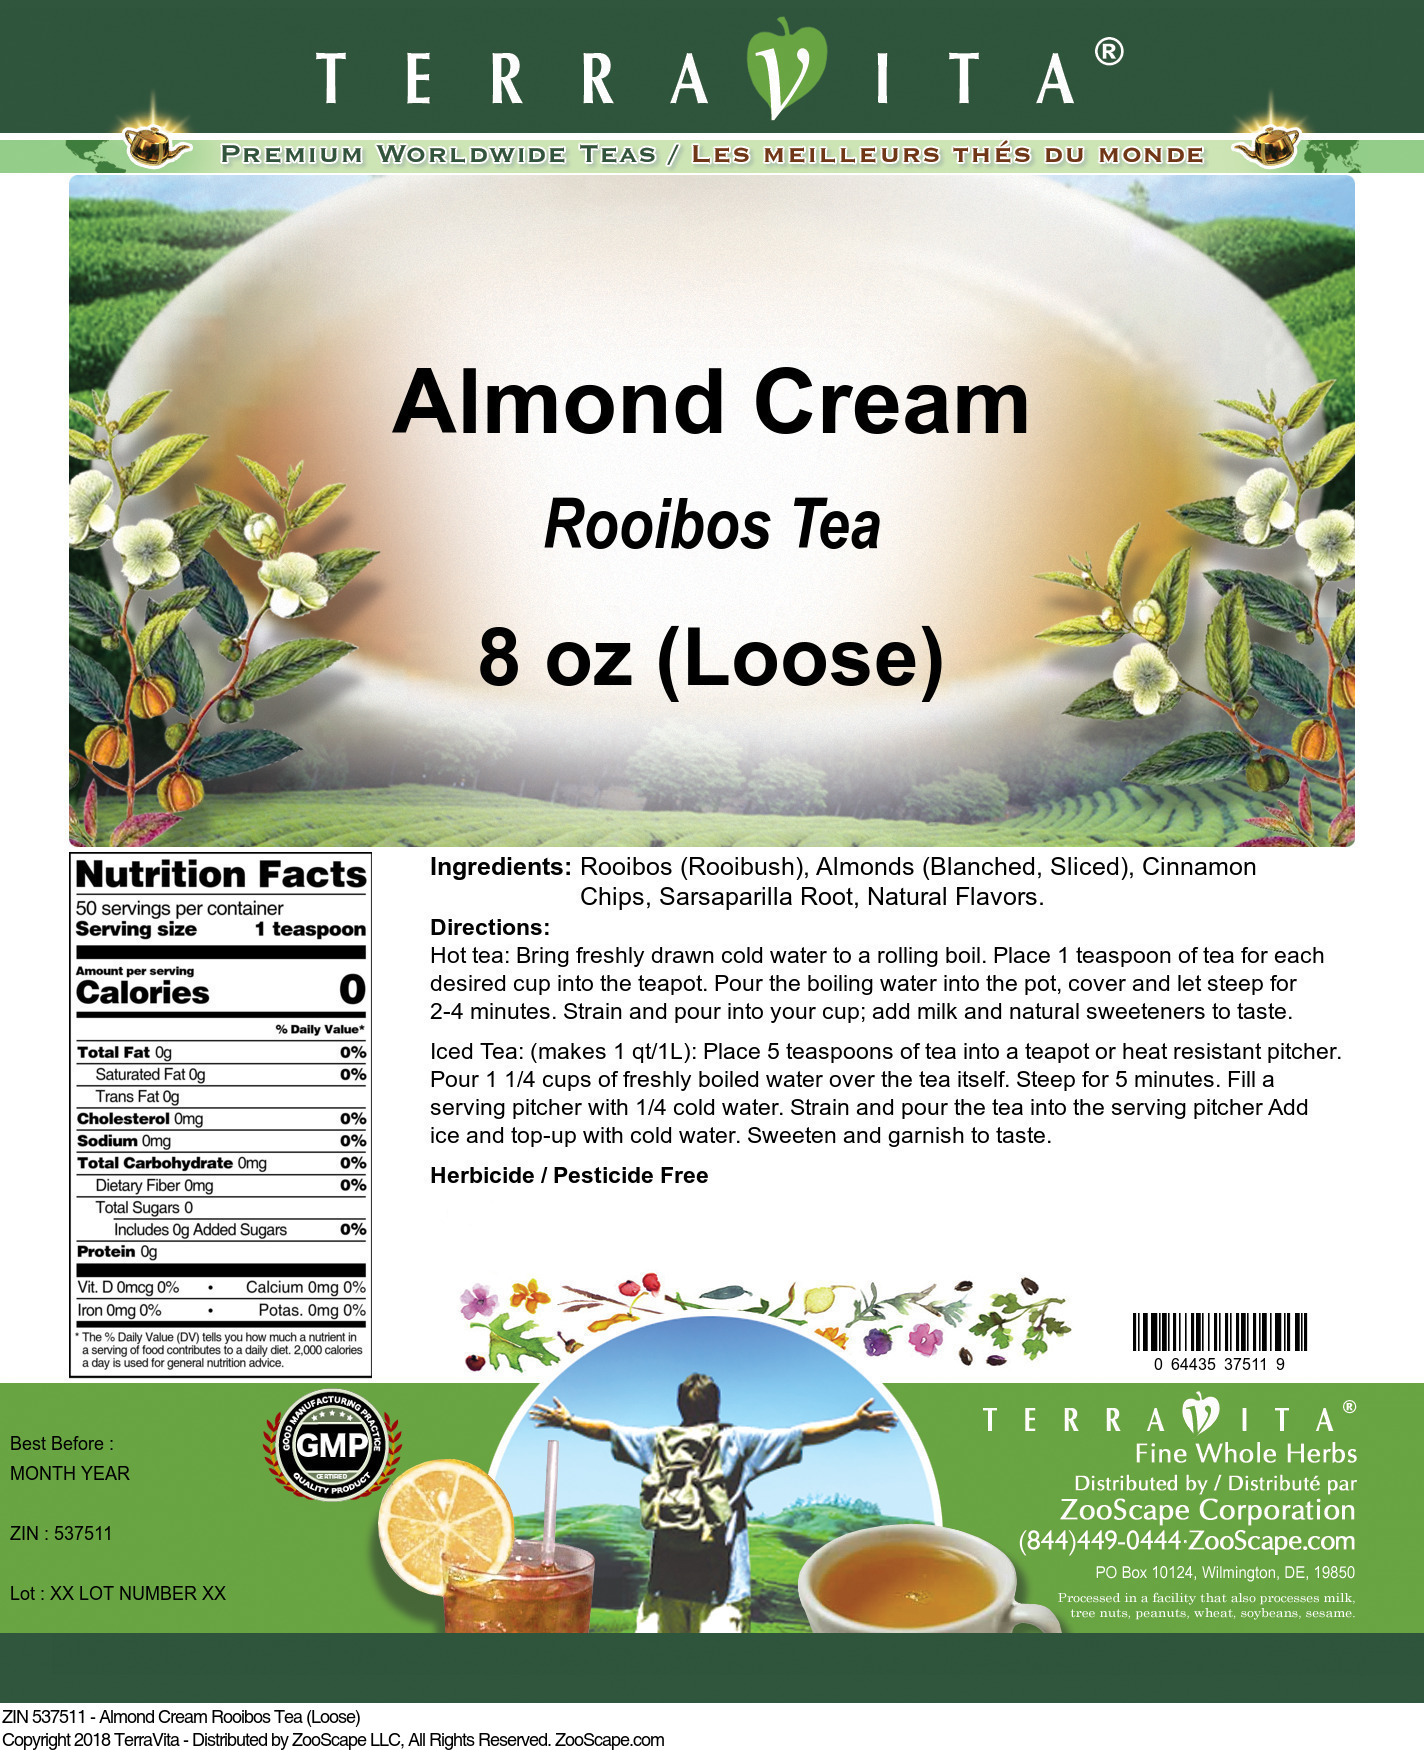 Almond Cream Rooibos Tea (Loose) - Label